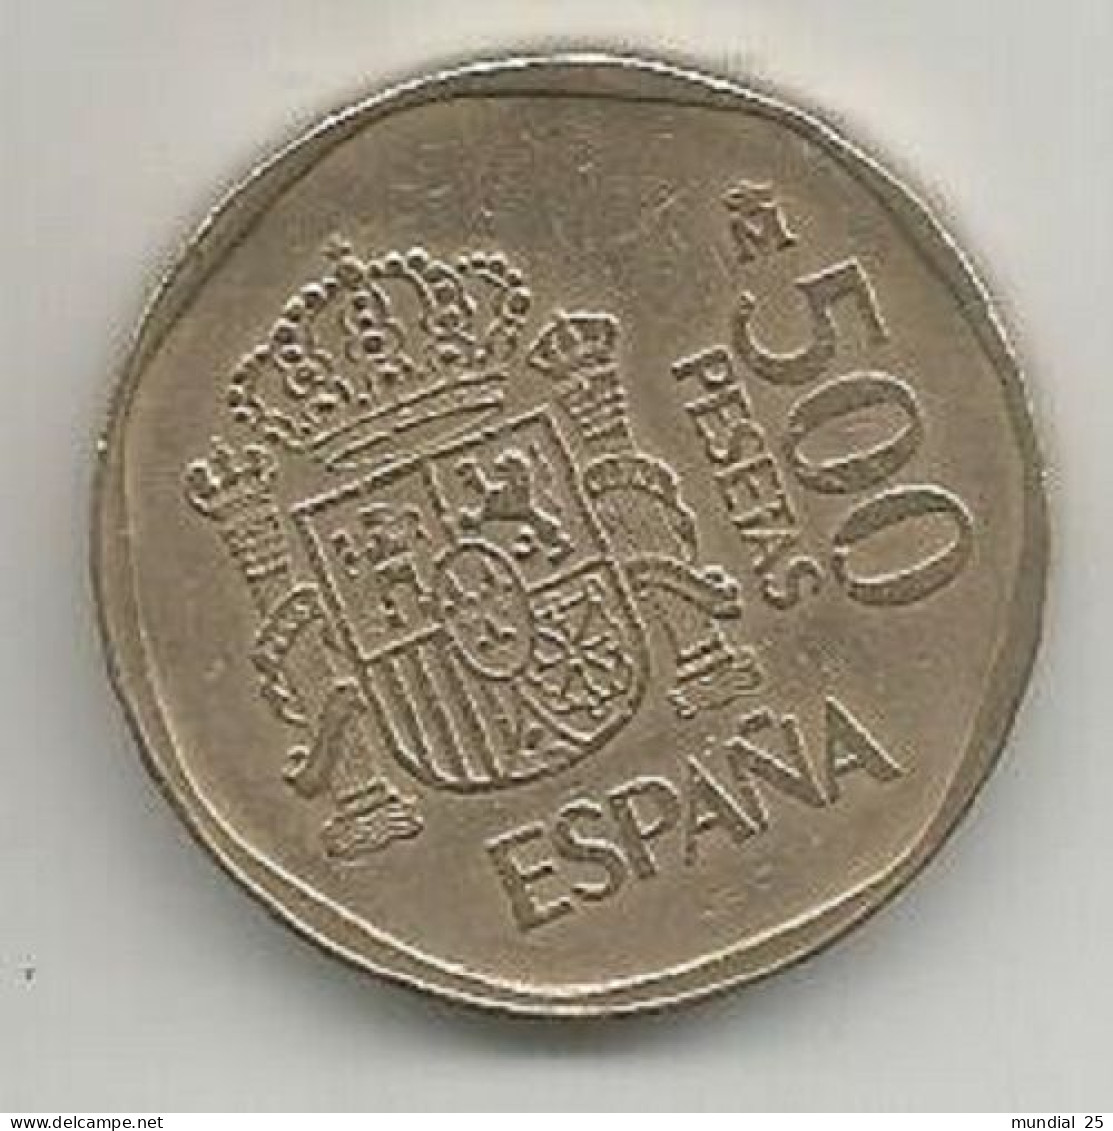 SPAIN 500 PESETAS 1988 - 500 Peseta